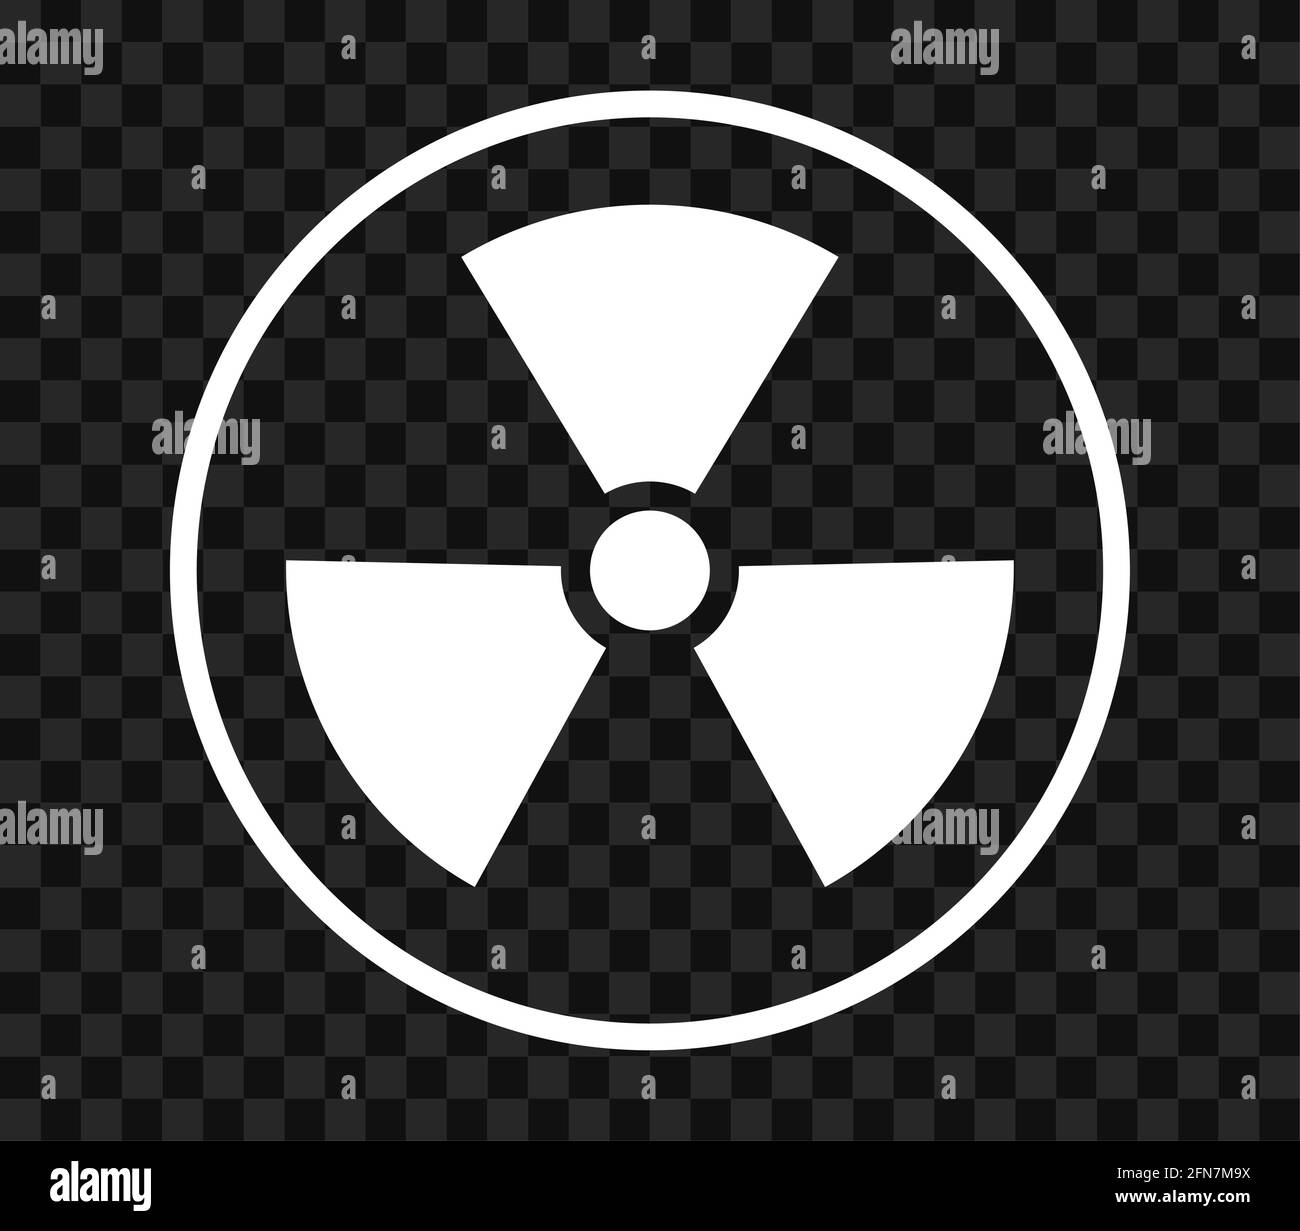 Radiation toxic symbol isolated on empty background. Flat warning sign . Stock Vector